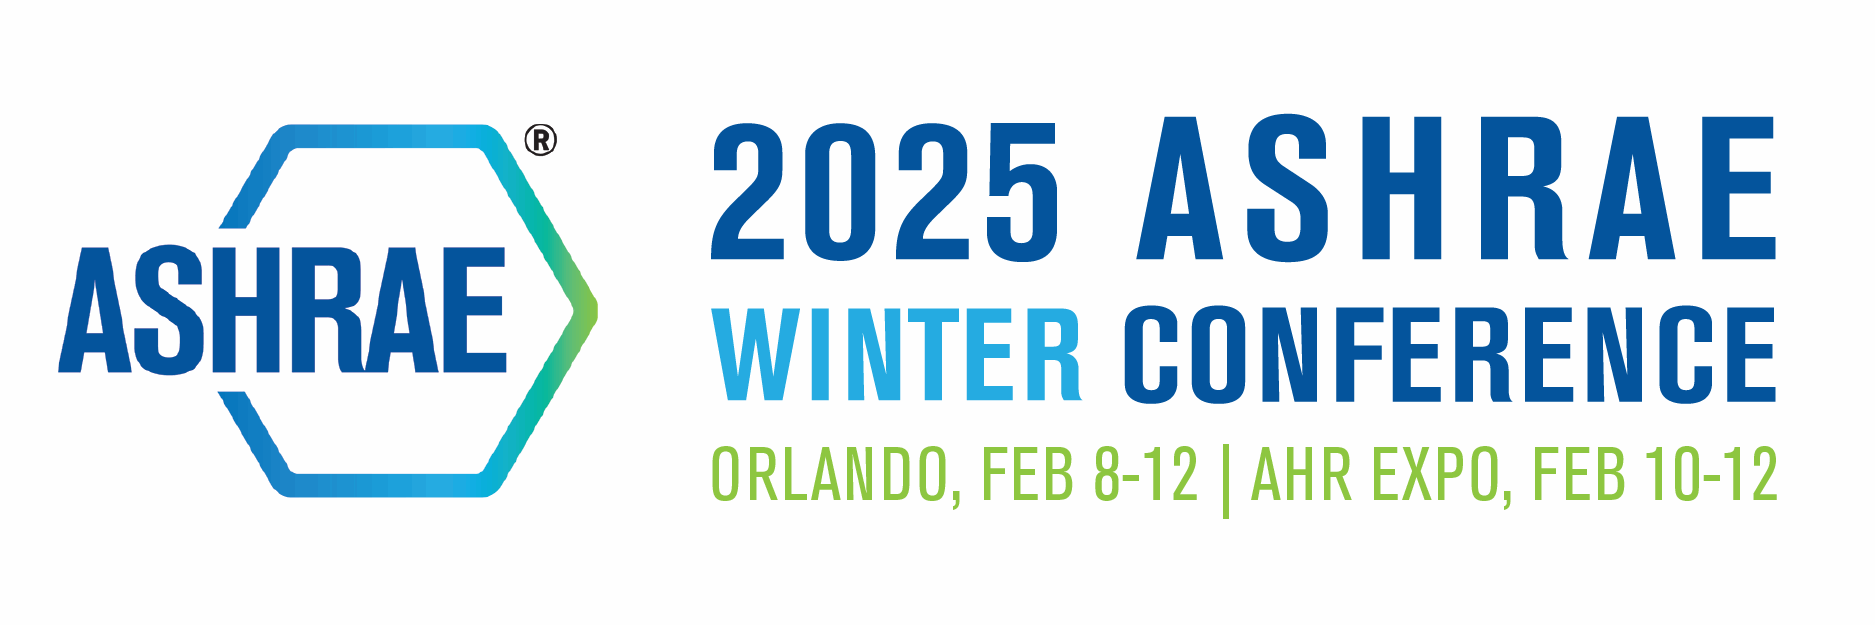 Travel 2025 ASHRAE Winter Conference